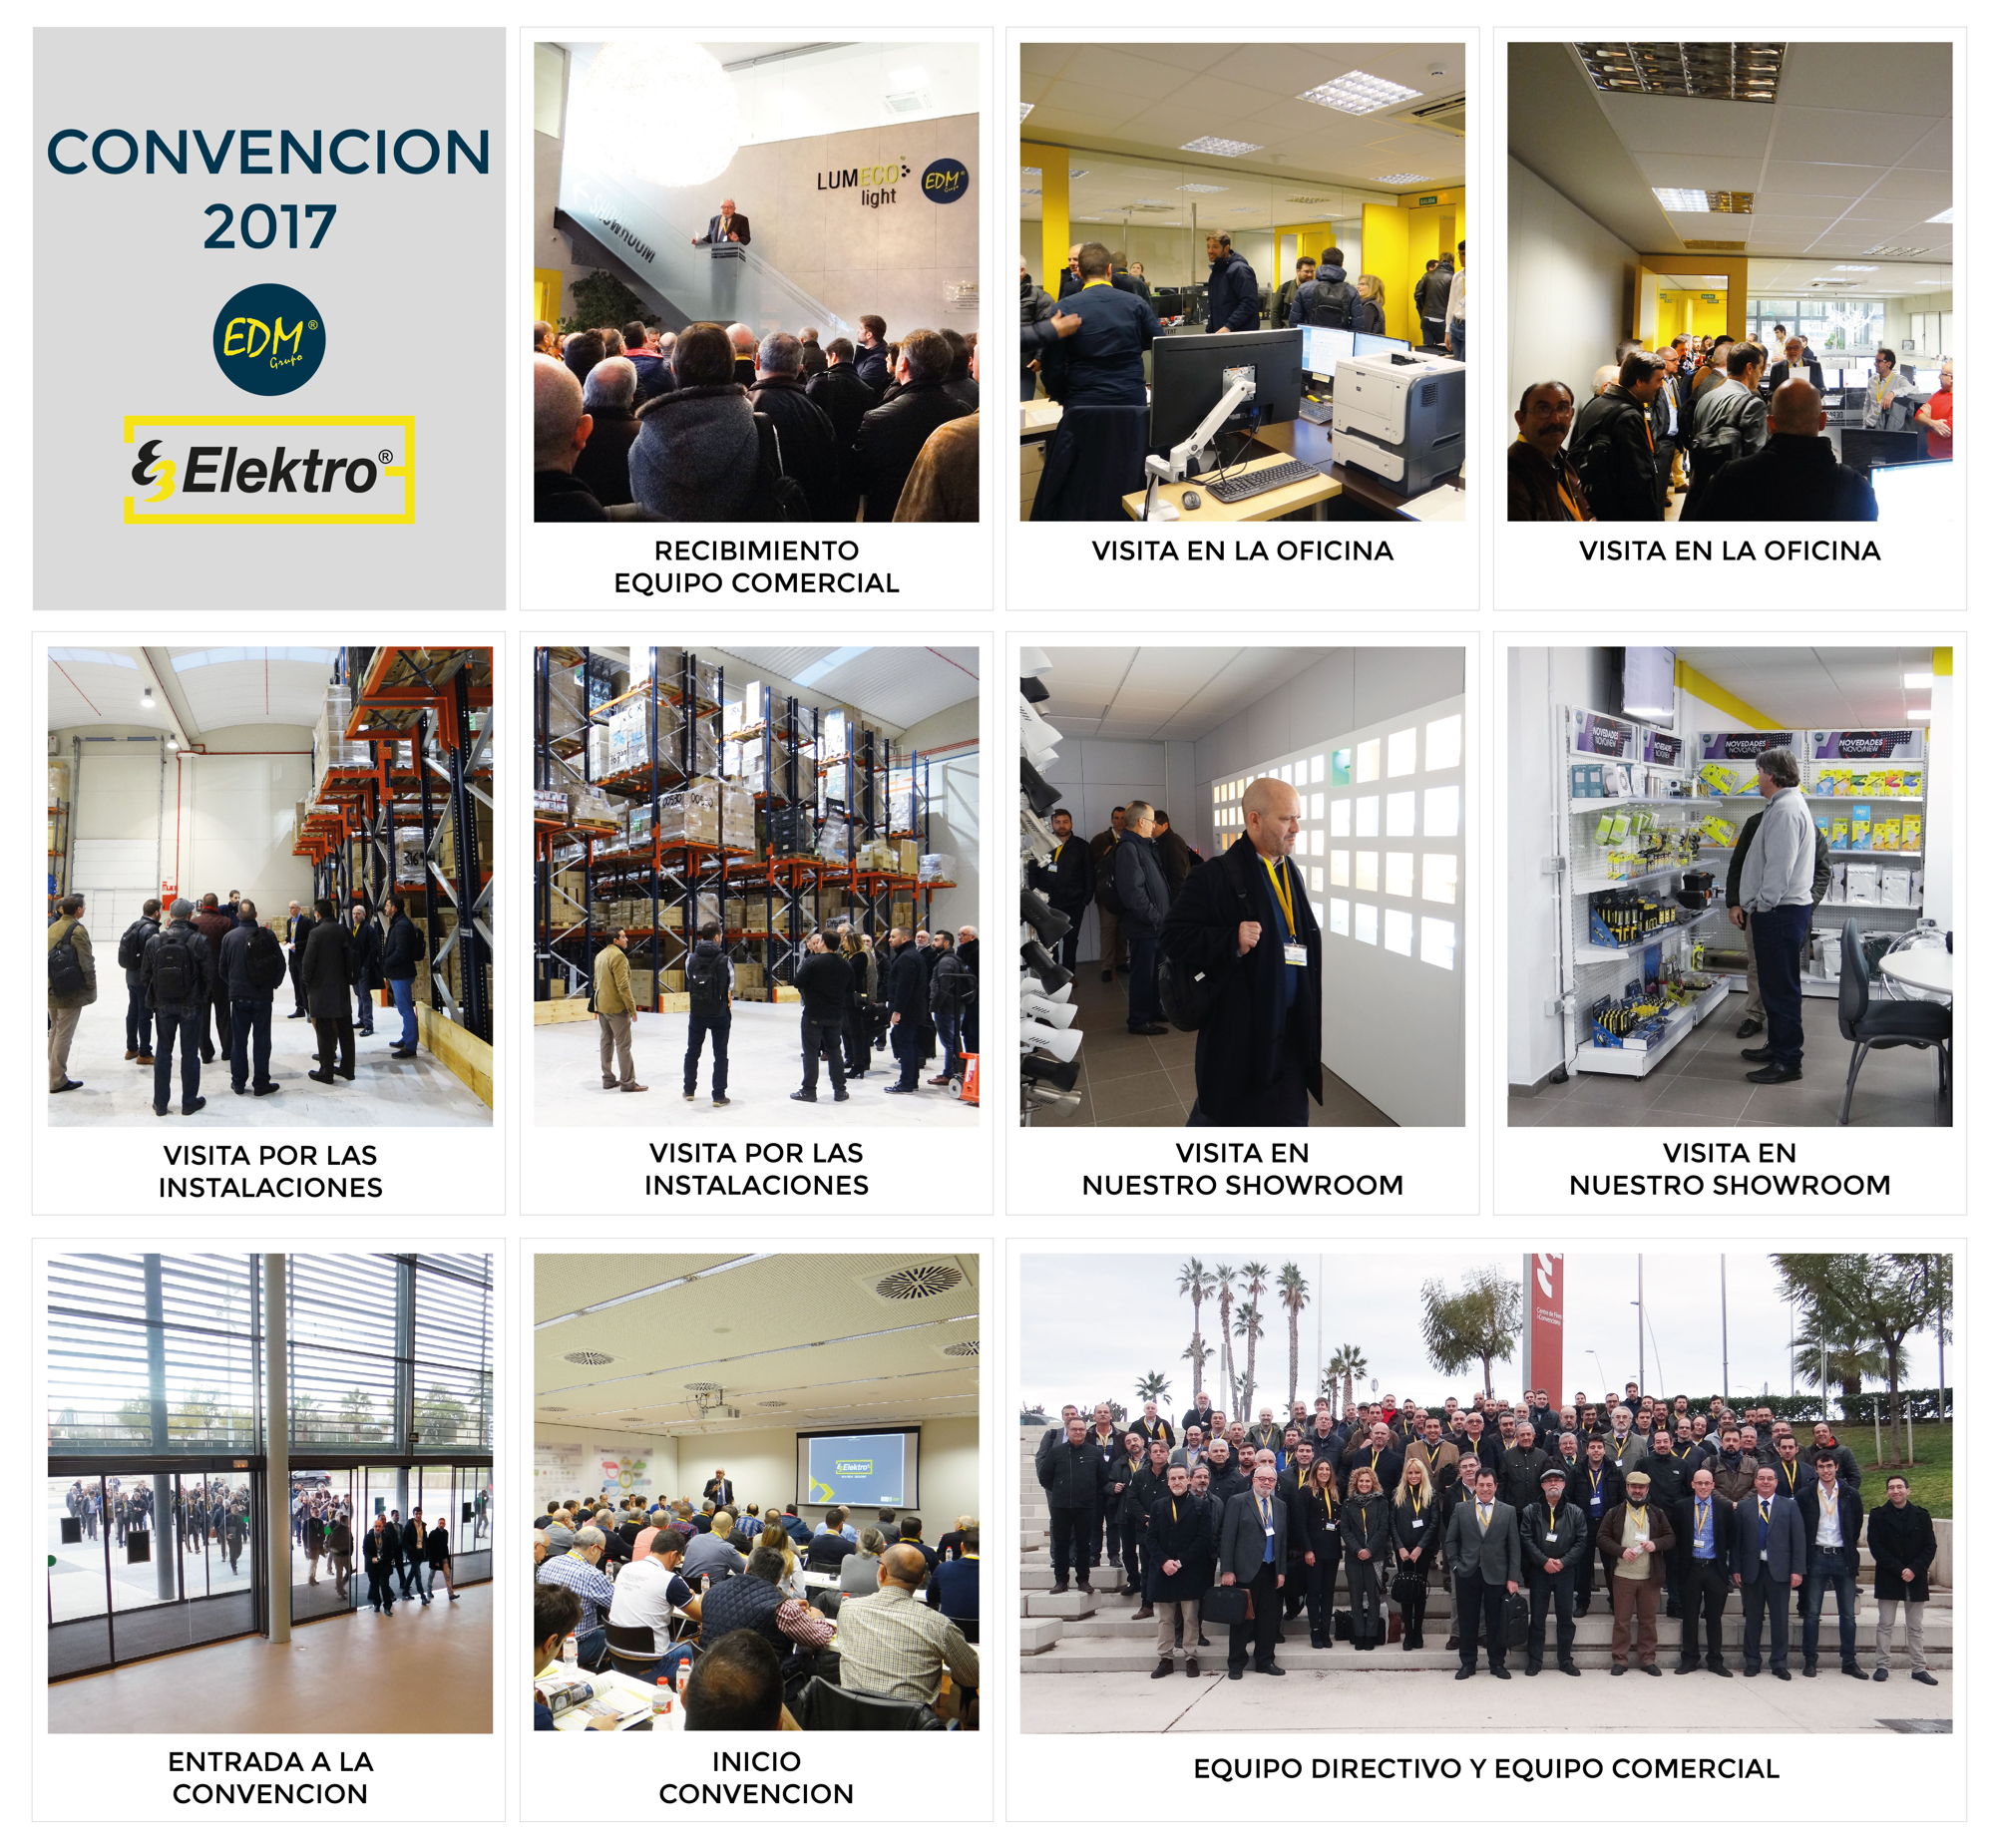 Convención Elektro3 - Grupo EDM 2017